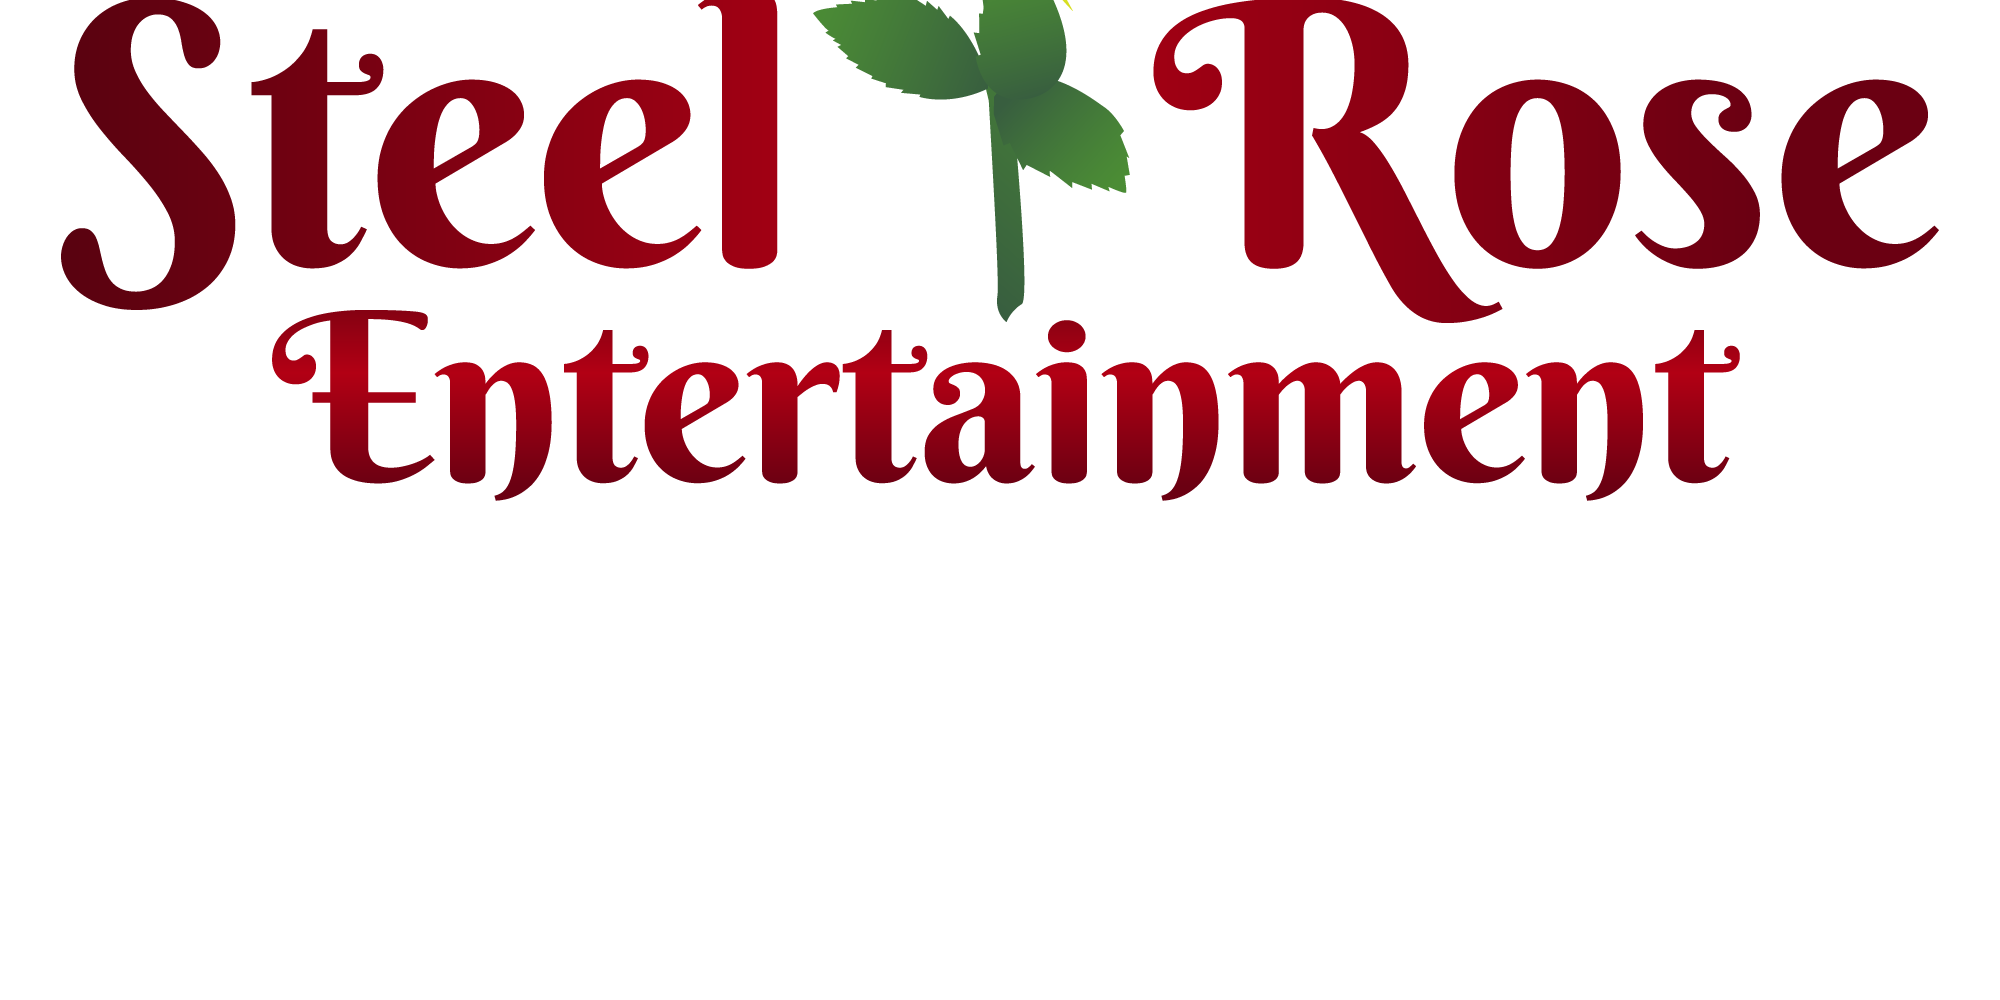 Steel Rose Entertainment